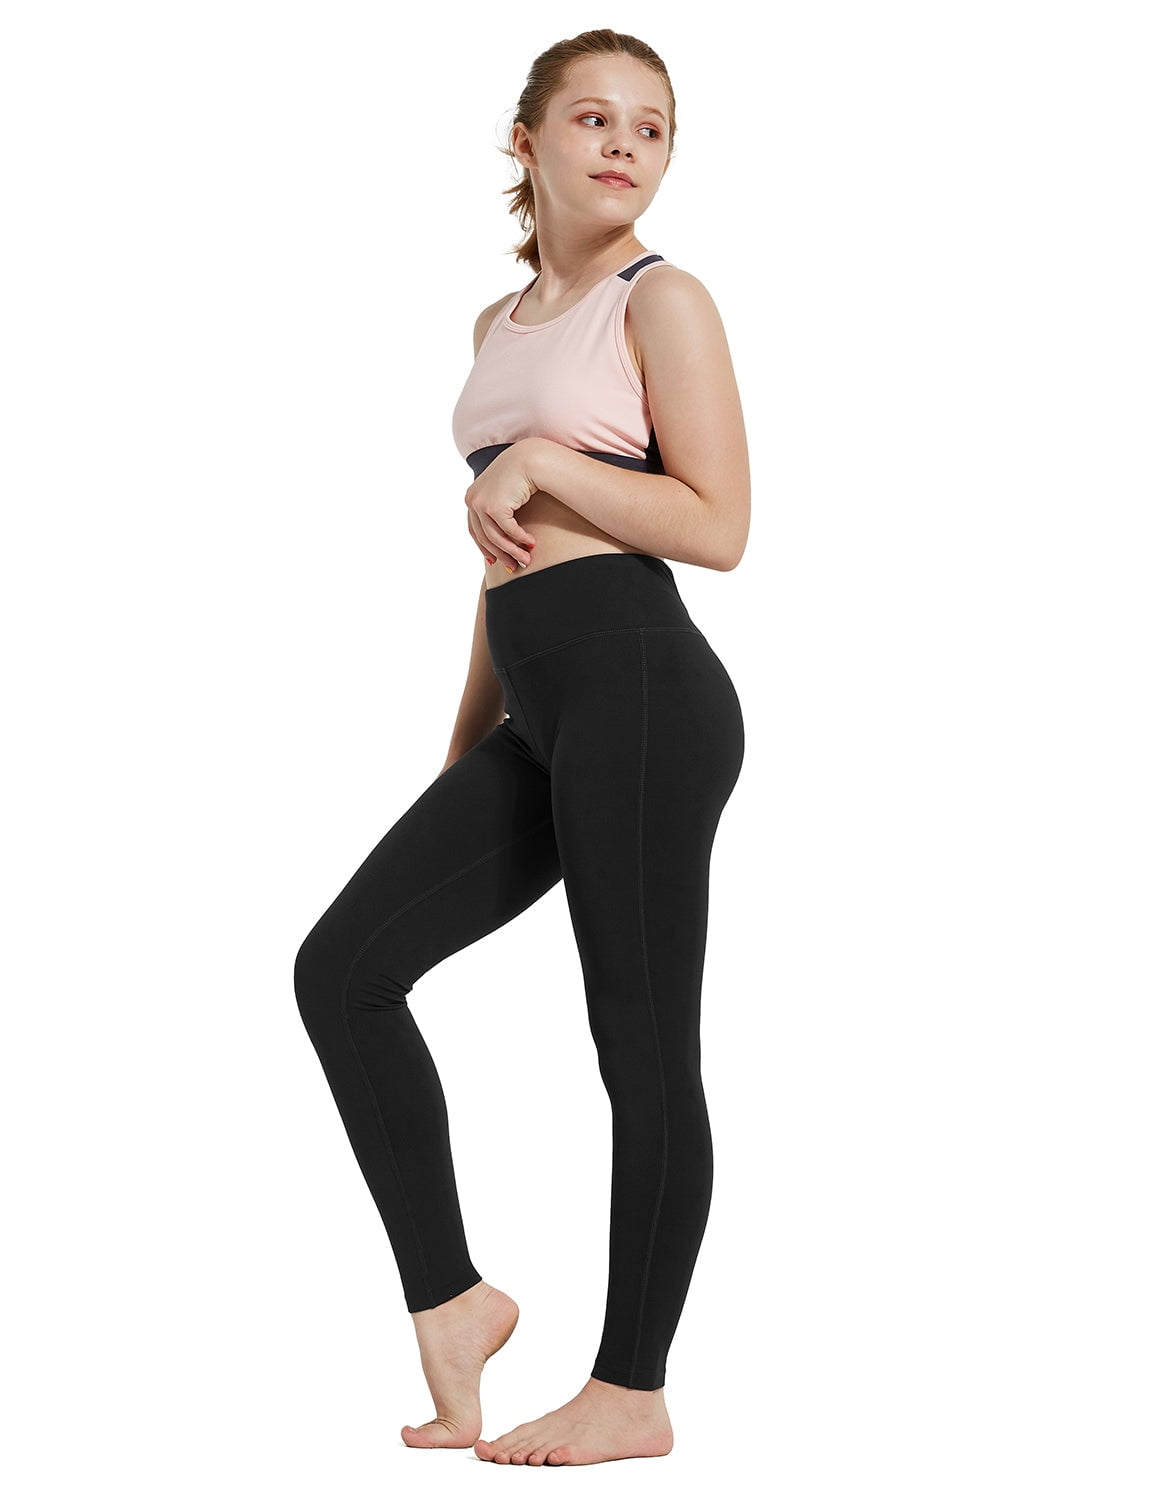 BALEAF Youth Girl's Athletic Dance Leggings Compression Pants Running  Active Yoga Tights with Back Pocket Black M 